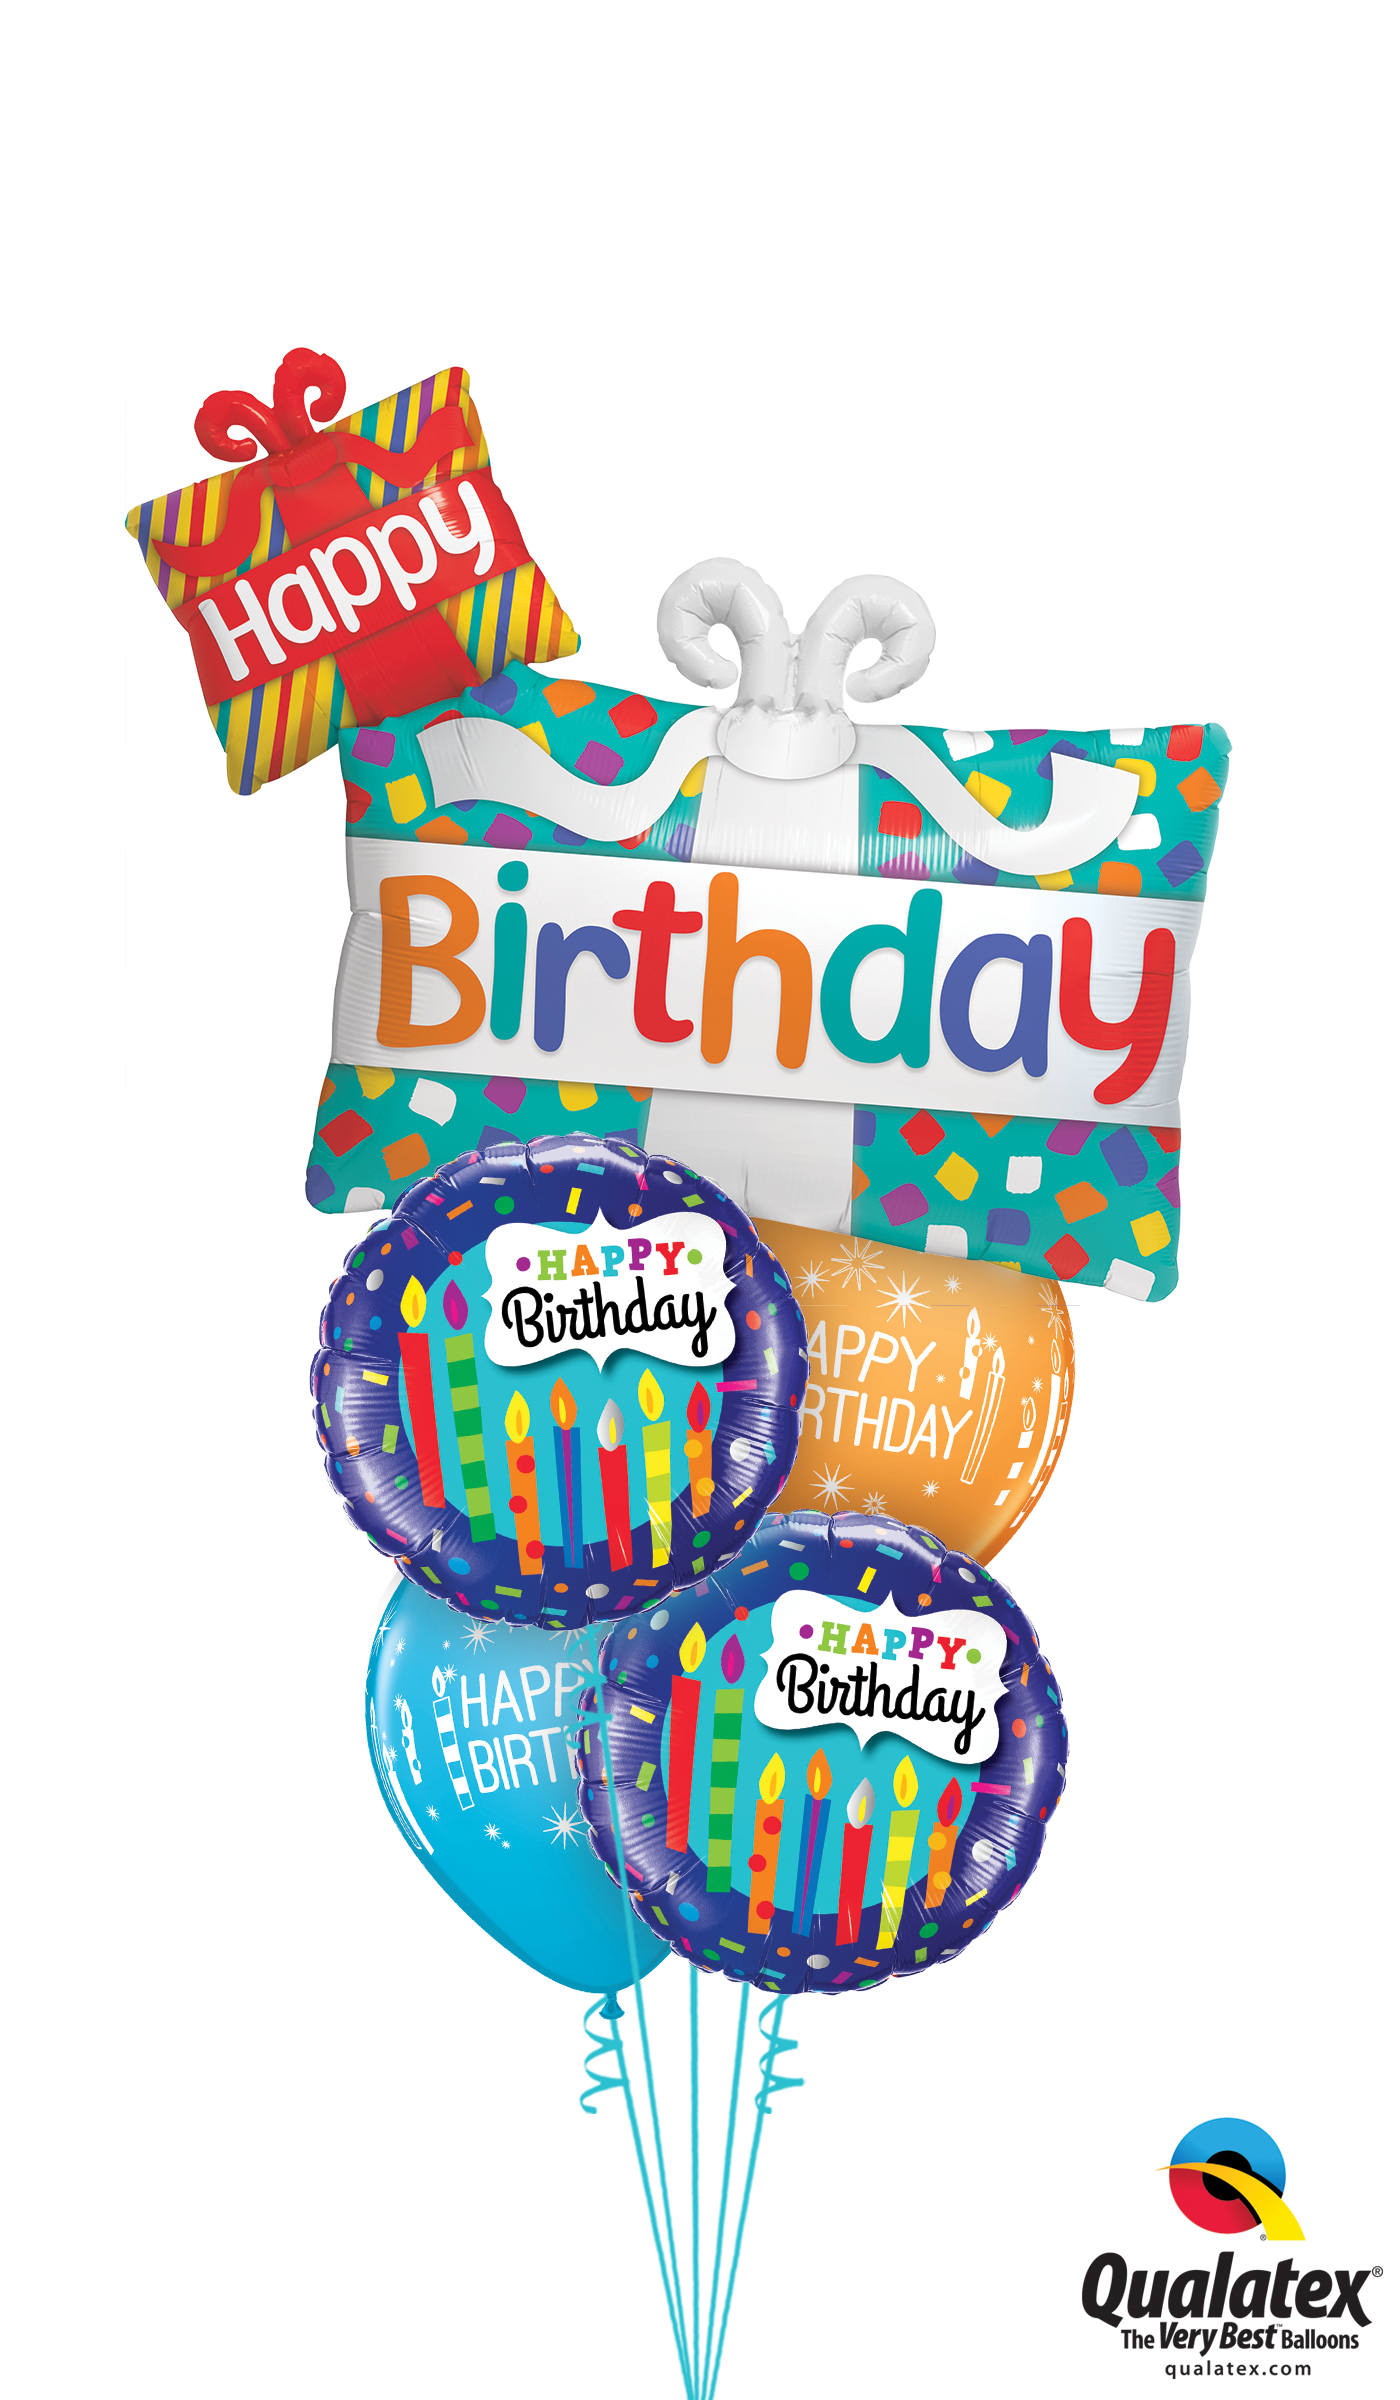 Classic Birthday Presents Balloon Bouquet - 39" Shape Happy Birthday Presents Foil Balloon - Mylar (1400x2400)